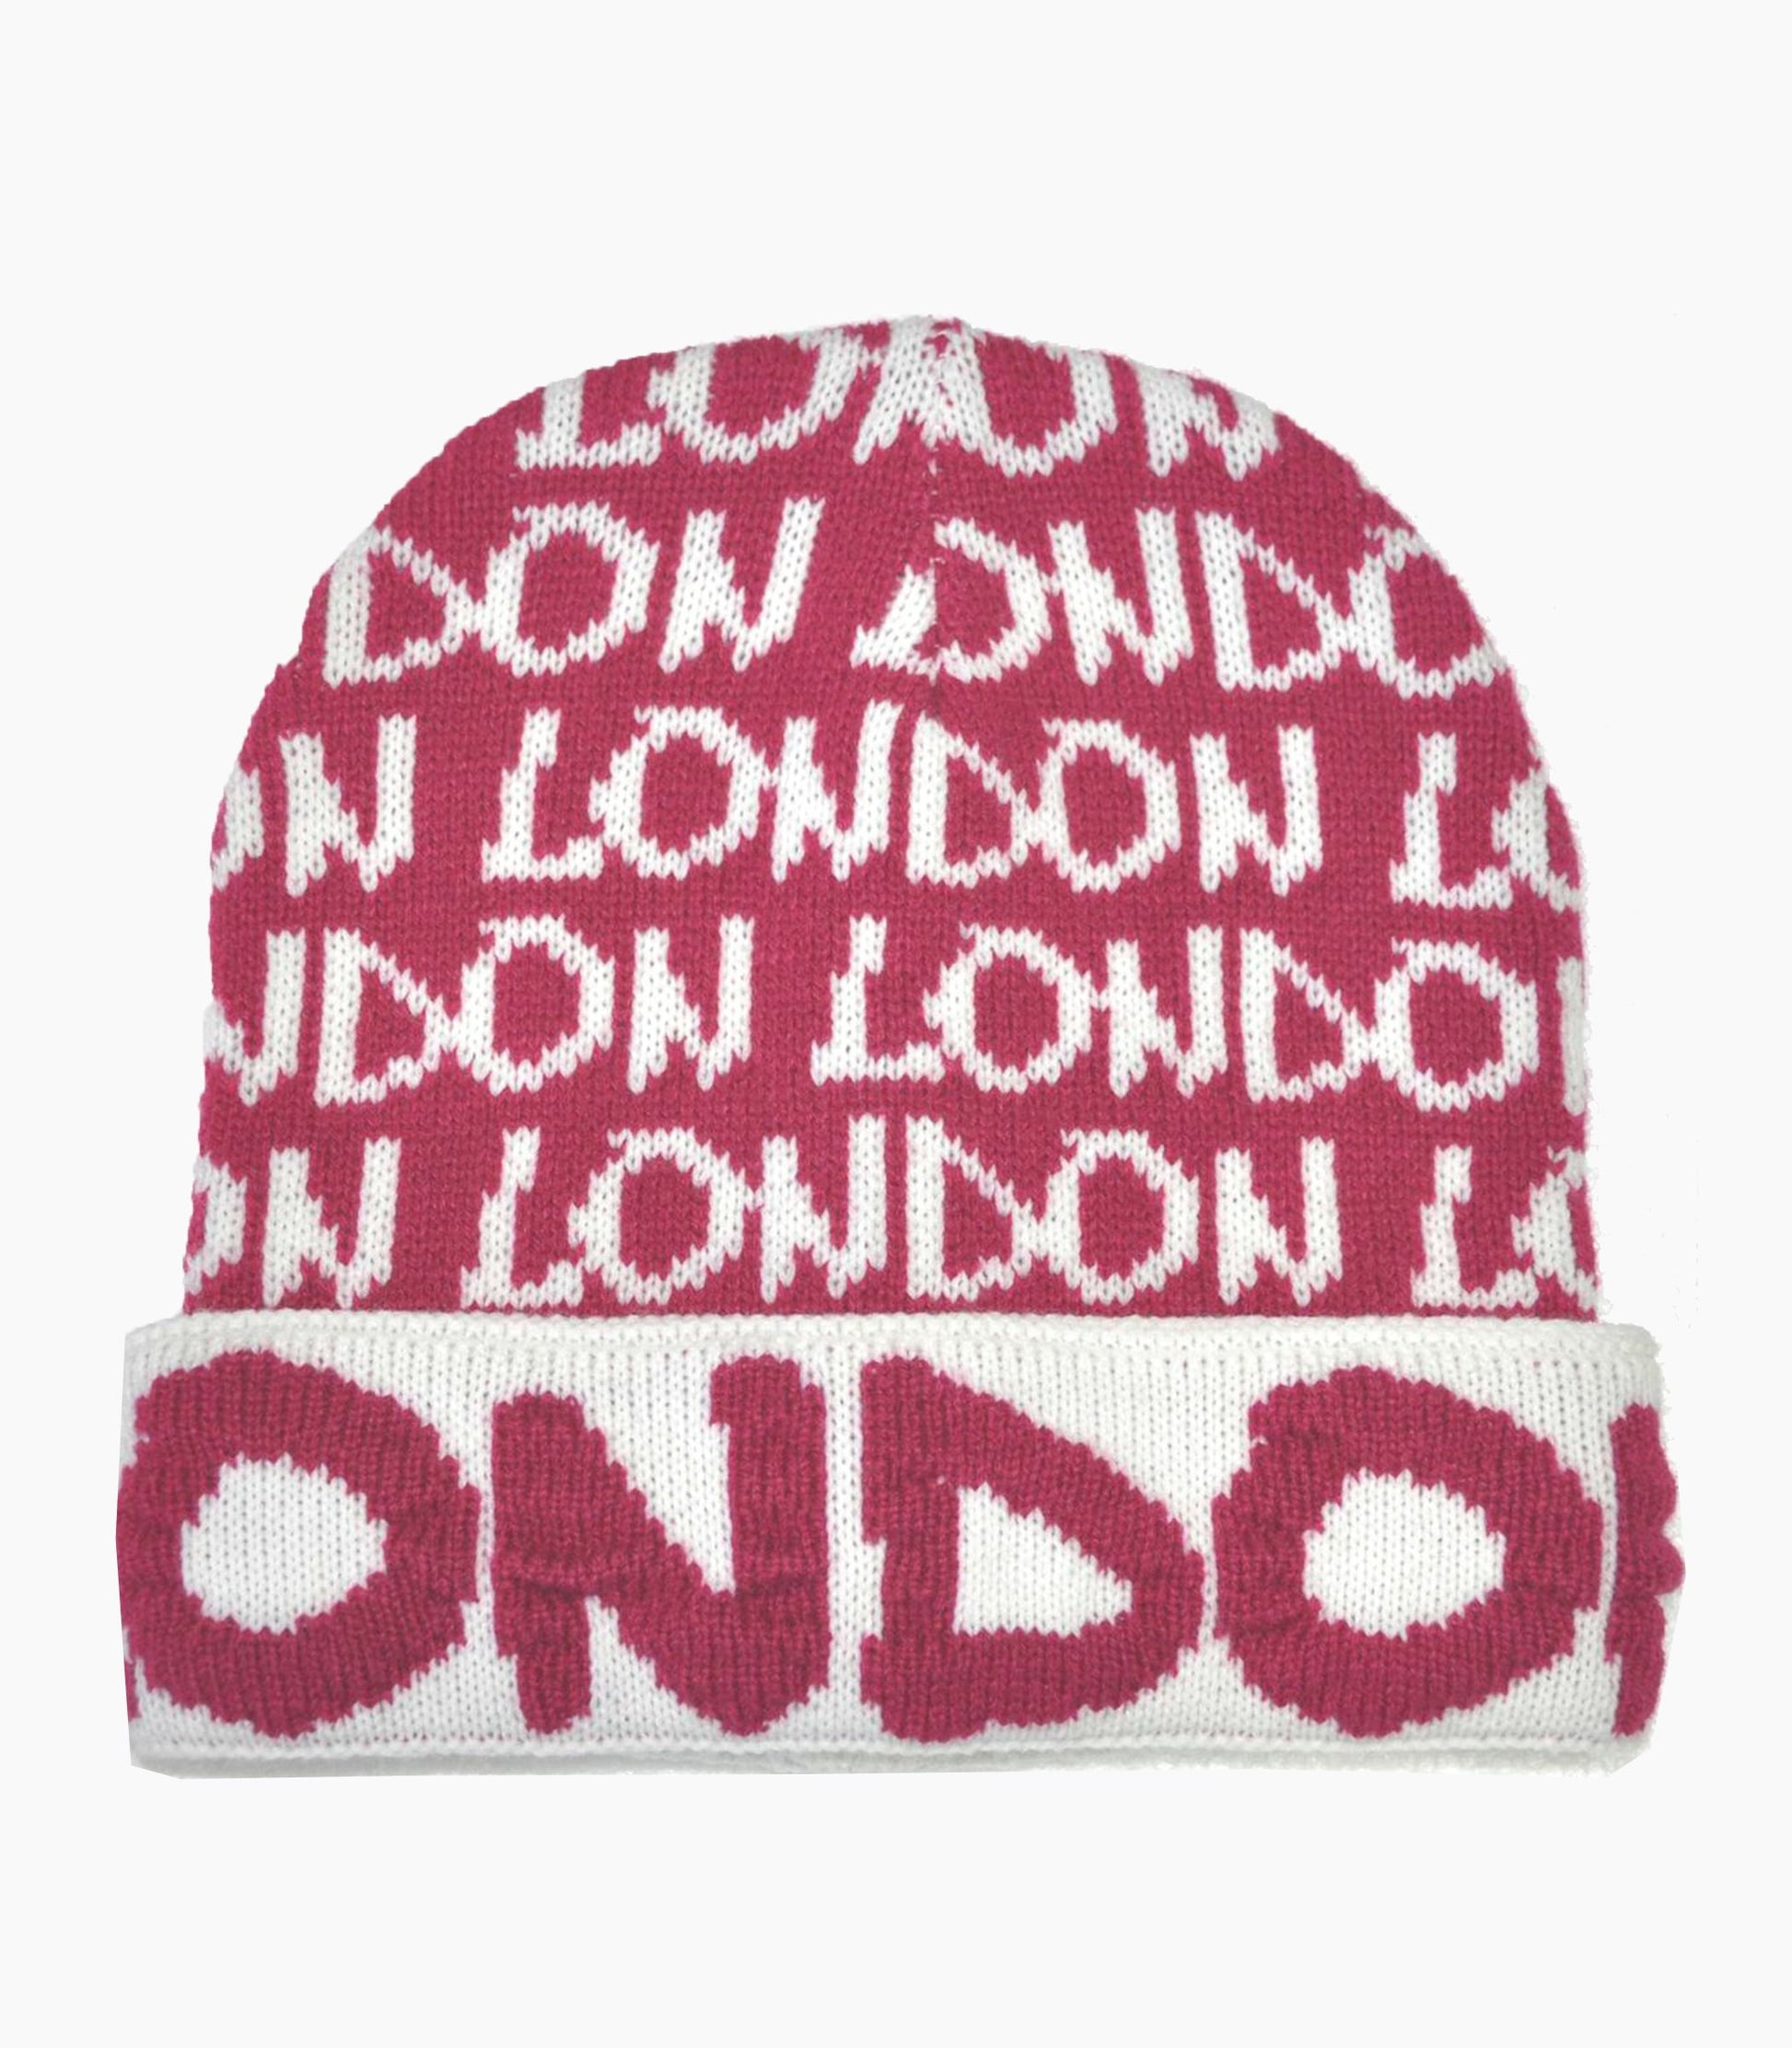 London Winter hat - Robin Ruth